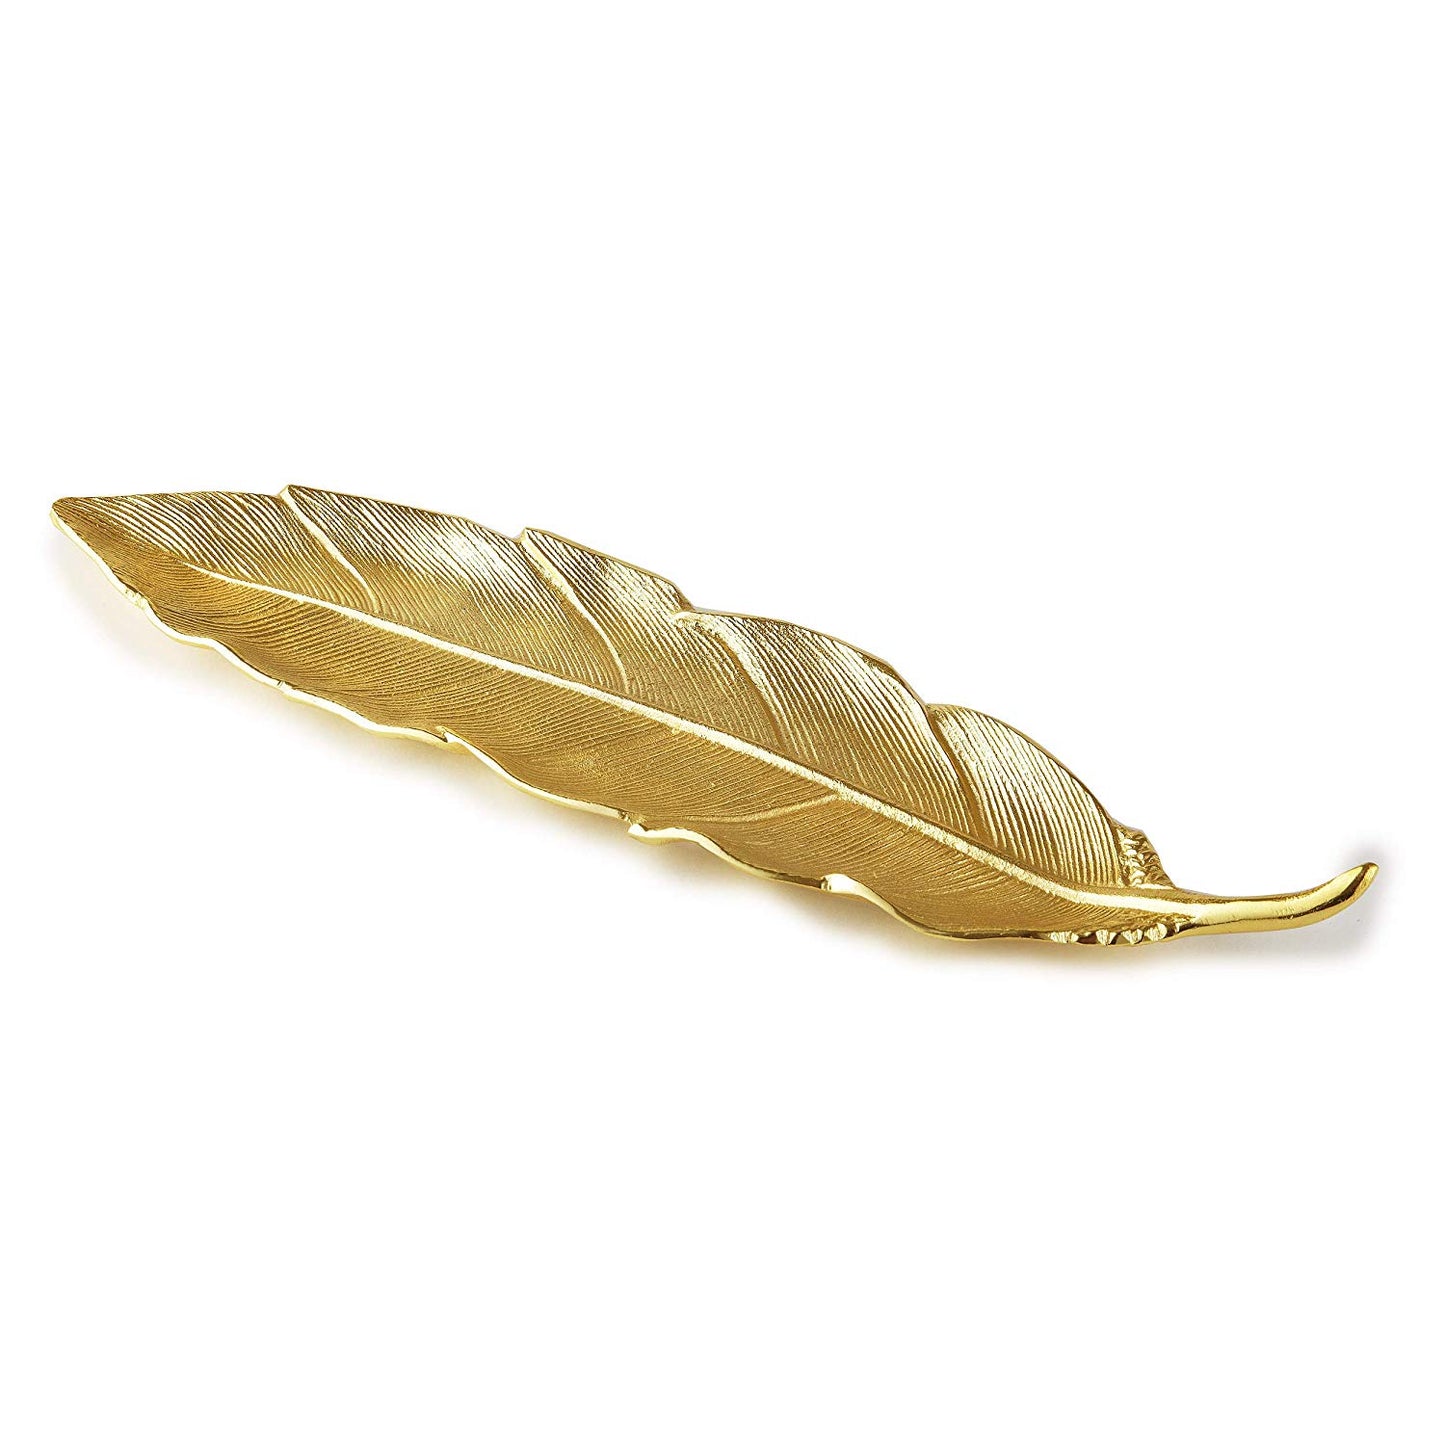 Leeber Feather Tray, 15.5", Gold, Aluminum